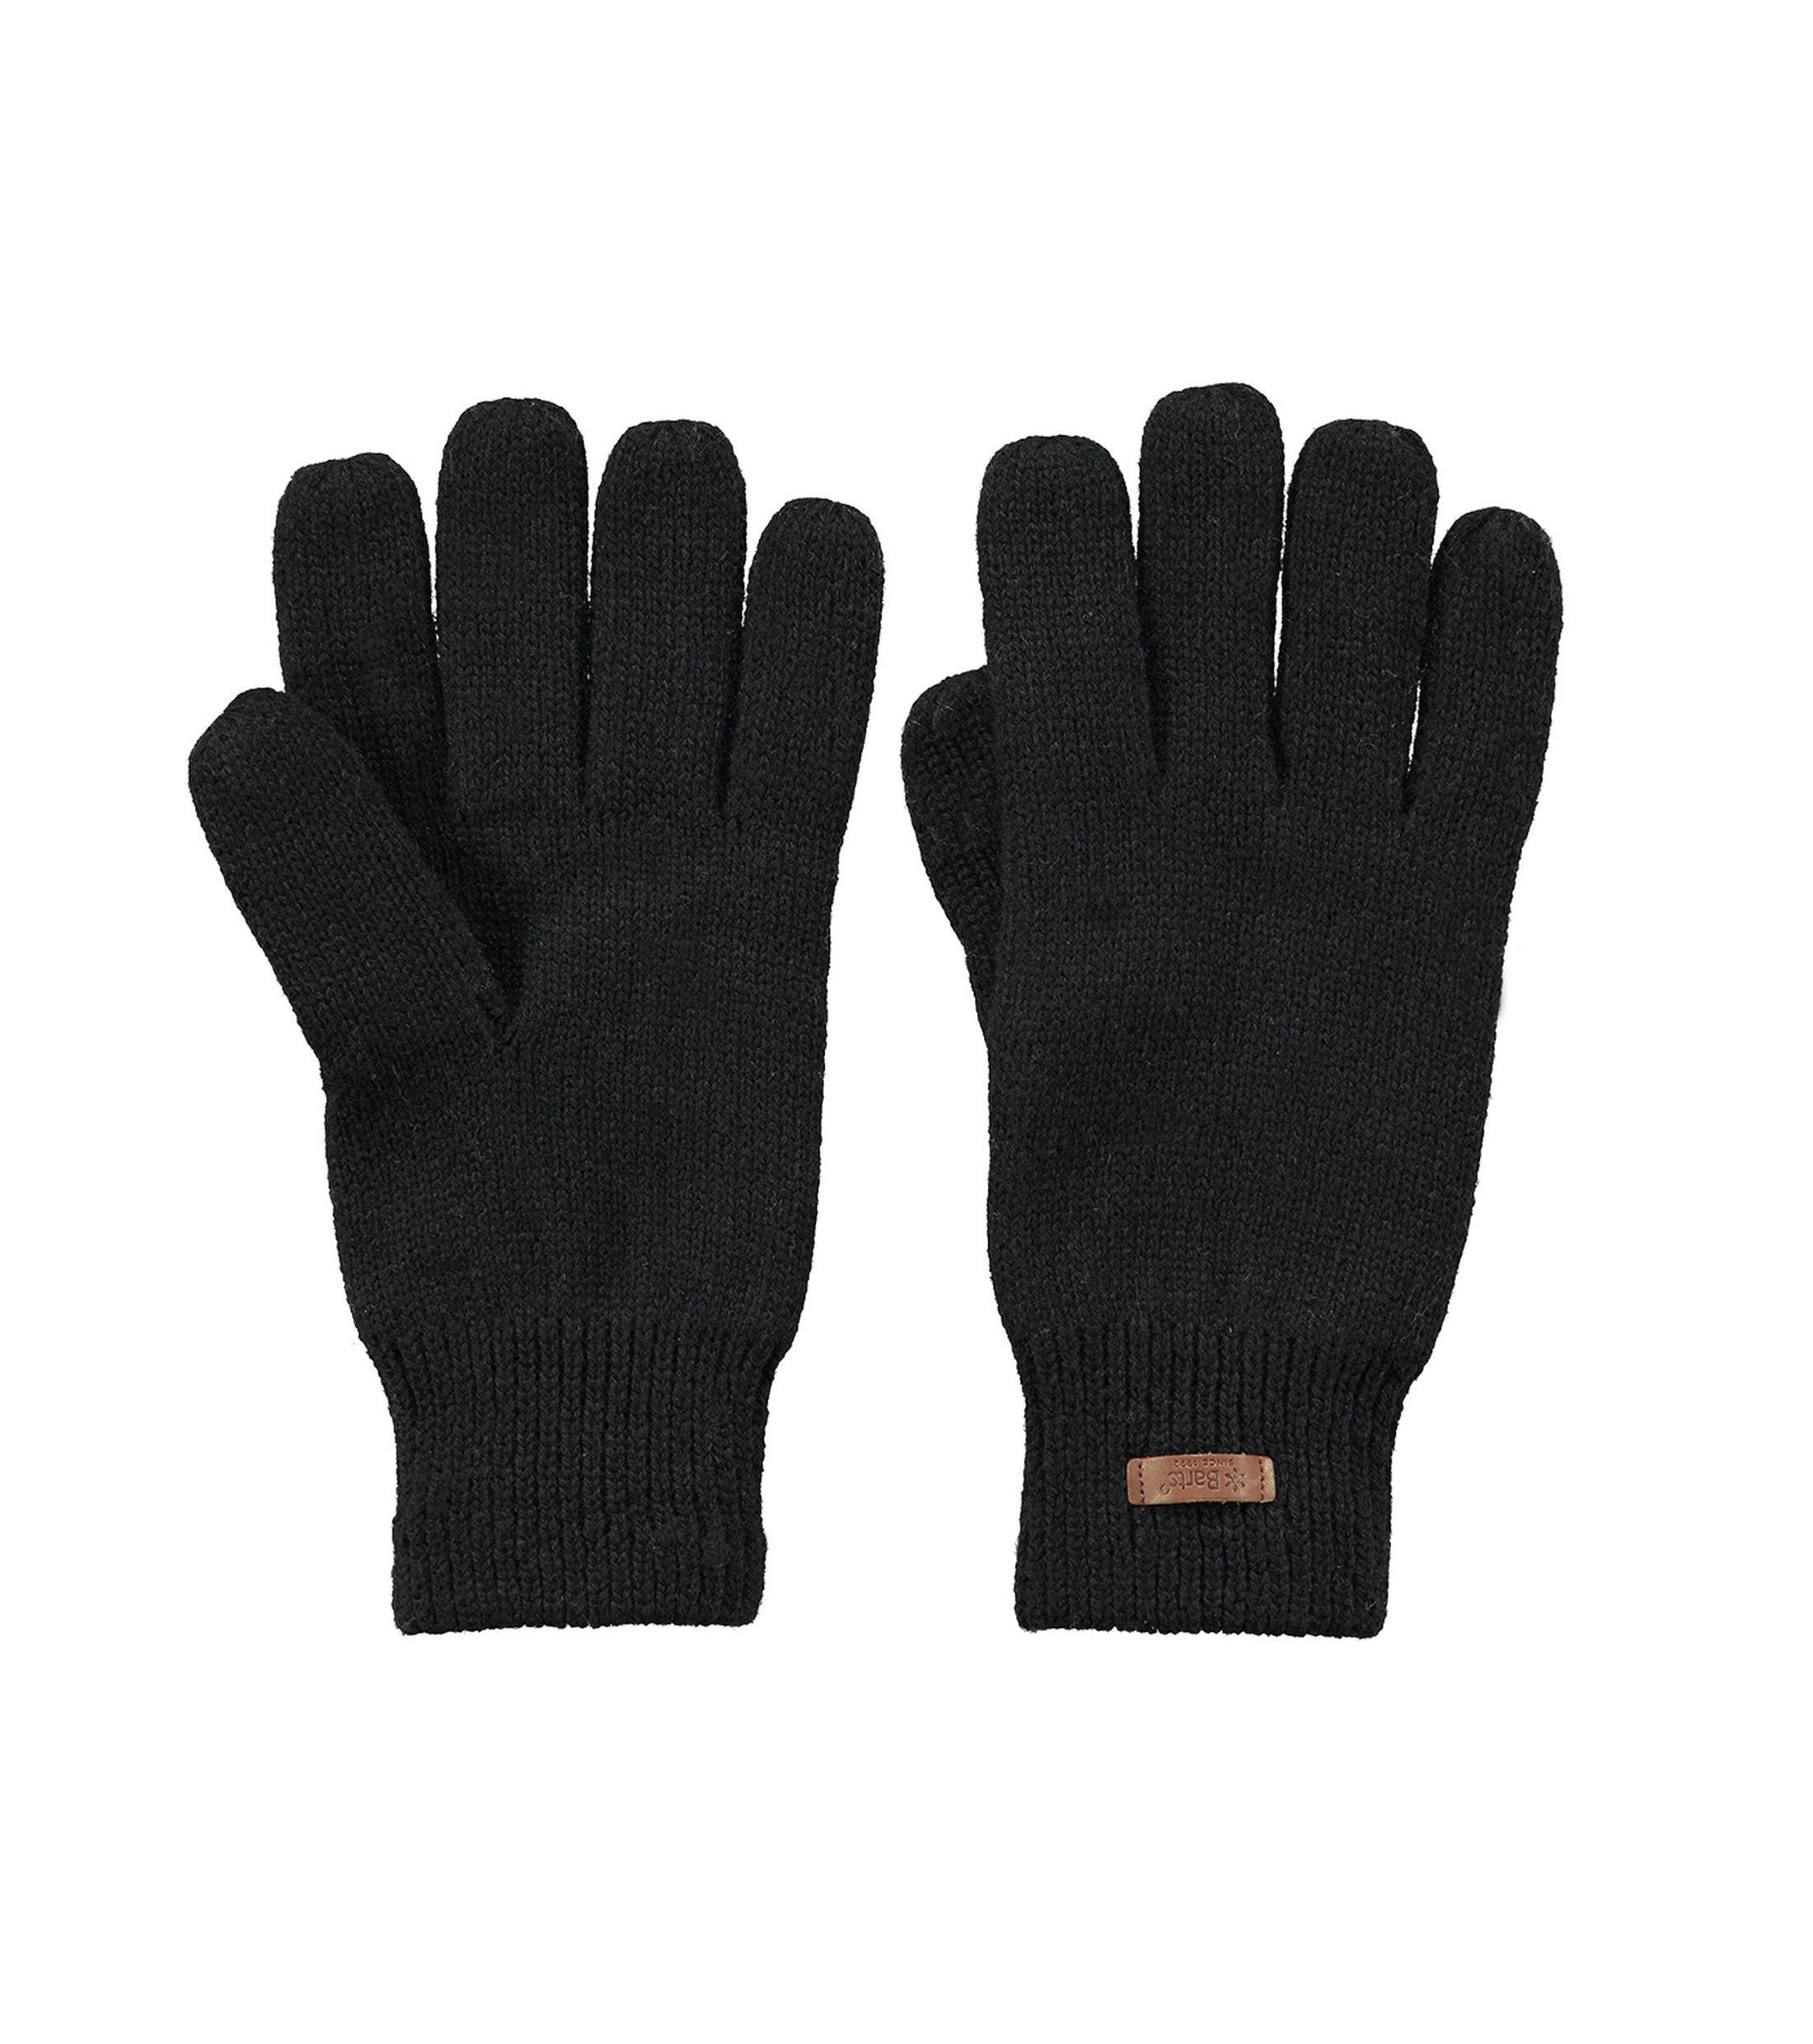 Barts Gloves Haakon Black size L/XL